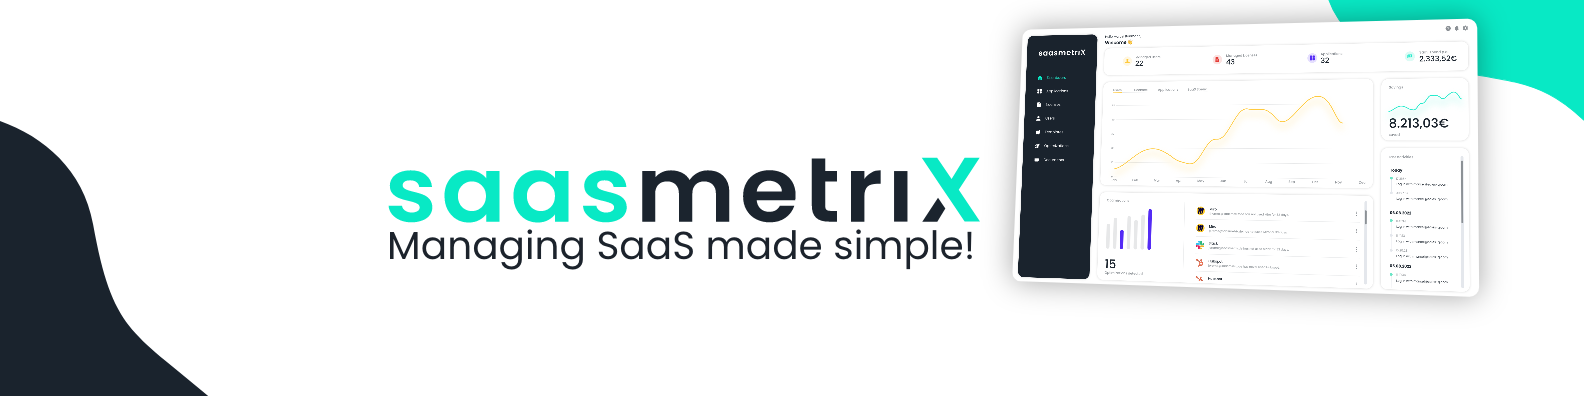 saasmetrix / startup from Detmold / Background